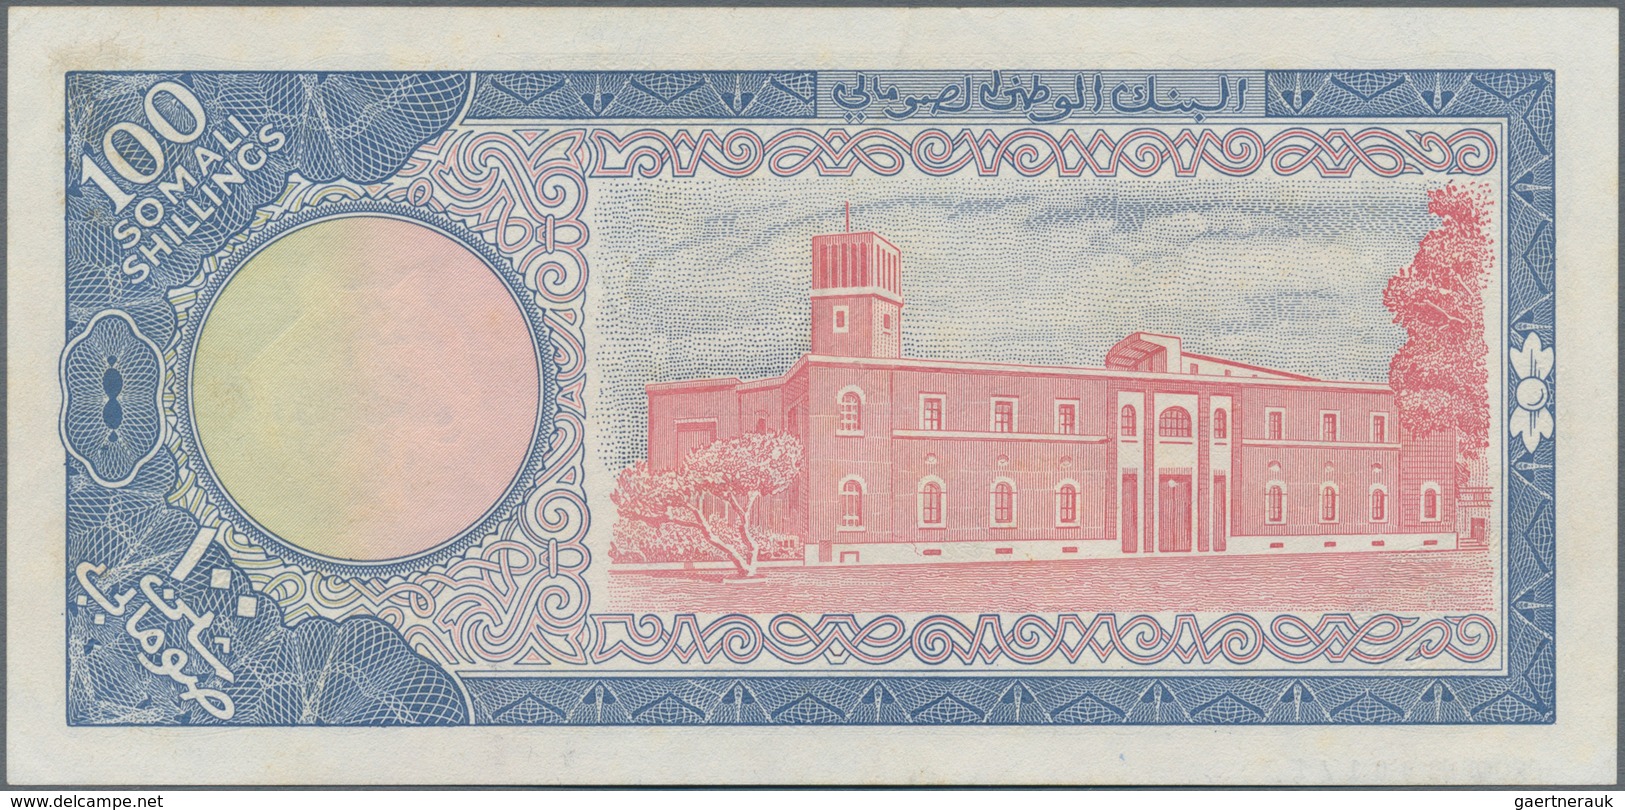 Somalia: Banca Nazionale Somala 100 Scellini 1966 SPECIMEN, P.8s, Very Soft Diagonal Bend At Center - Somalia